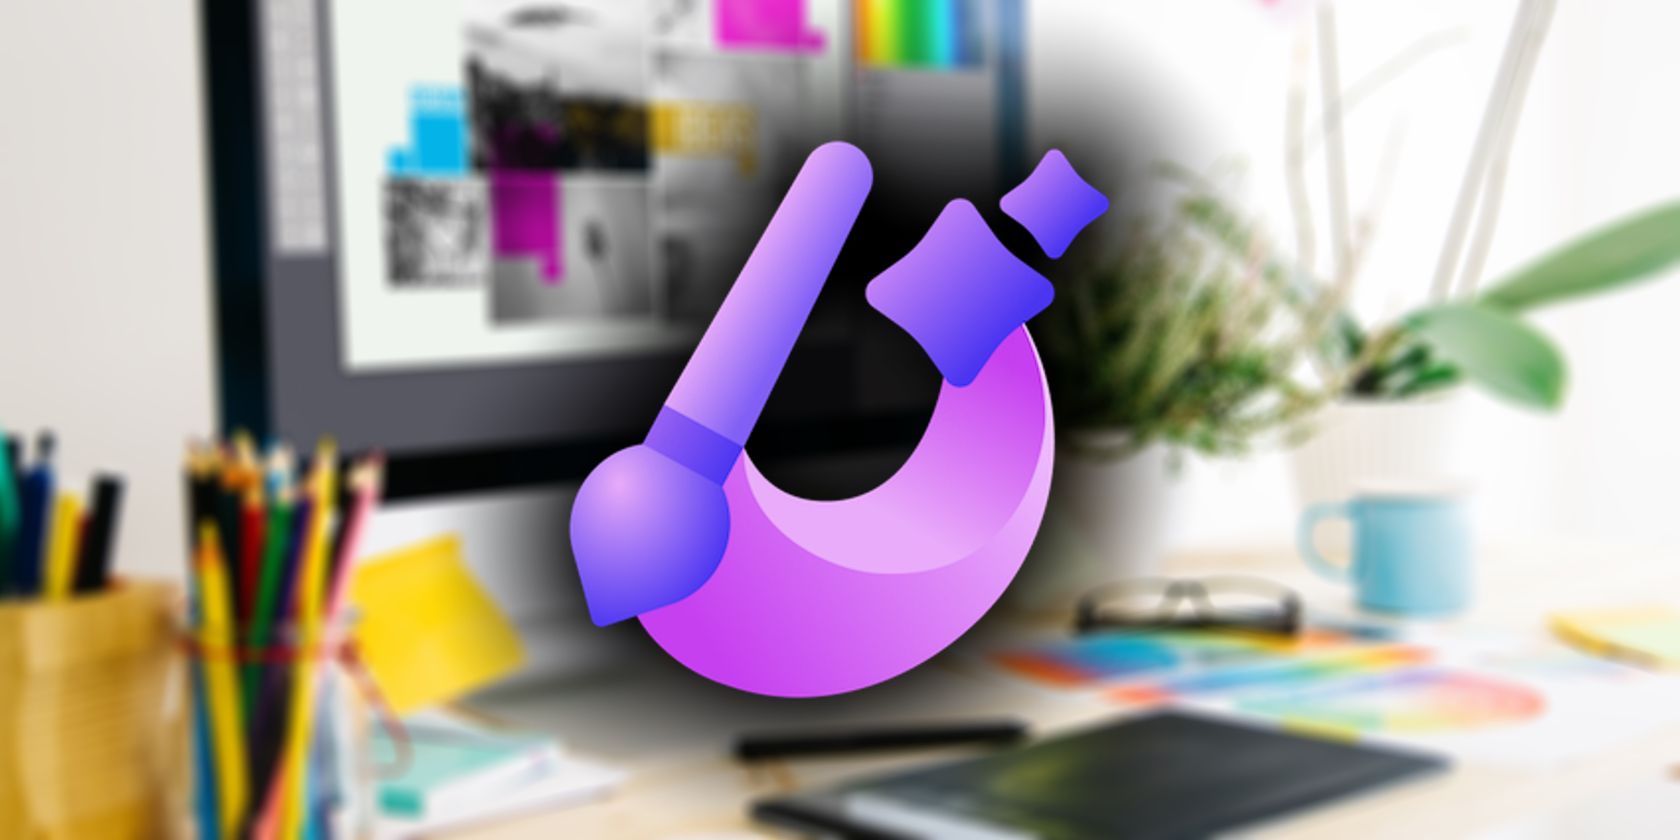 microsoft designer logo on graphics design desk background